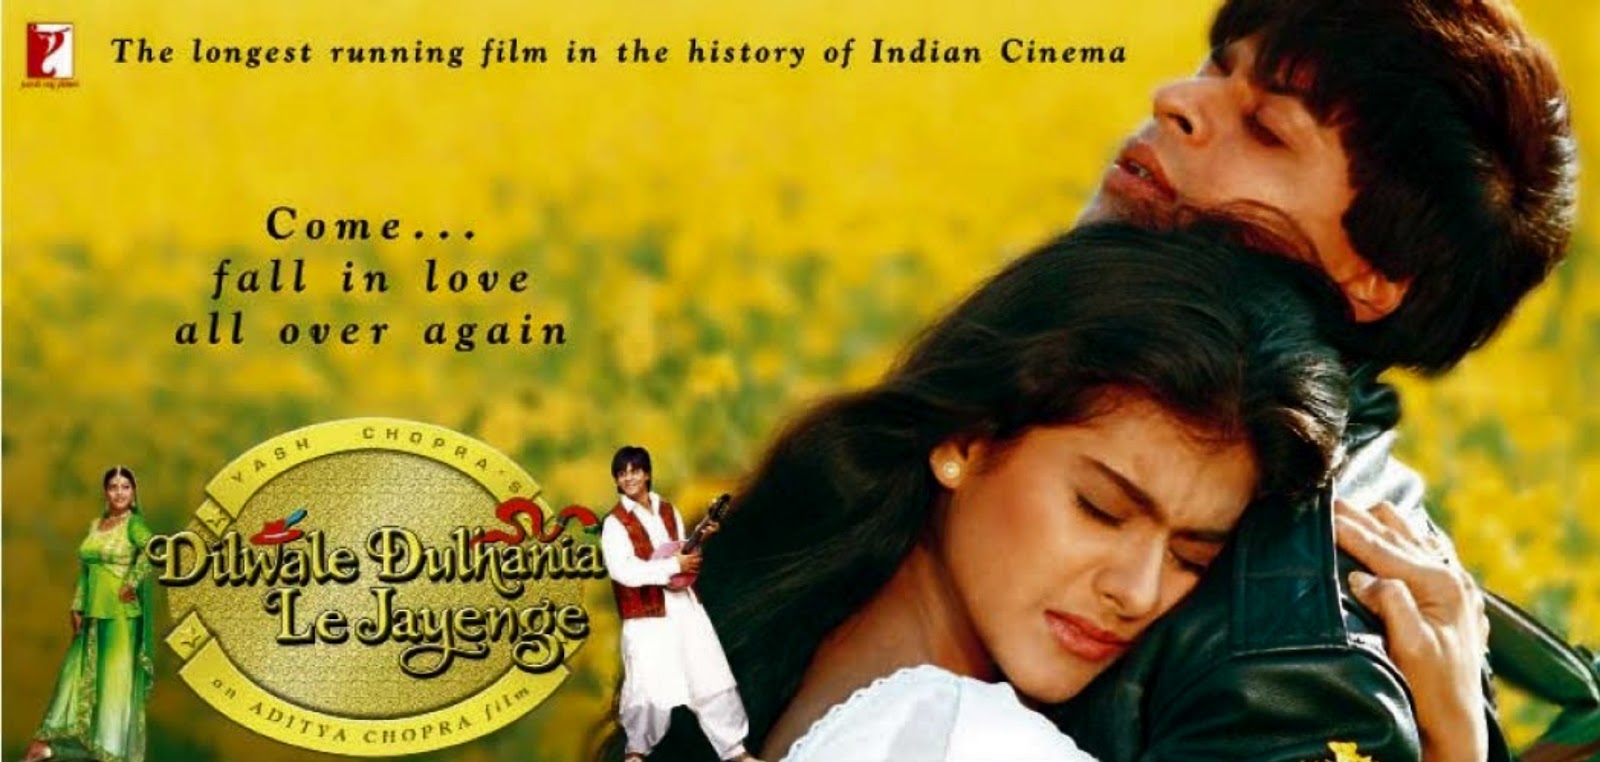 Preminchi Pelladutha Telugu Movie Mp3 Songs Free Download -